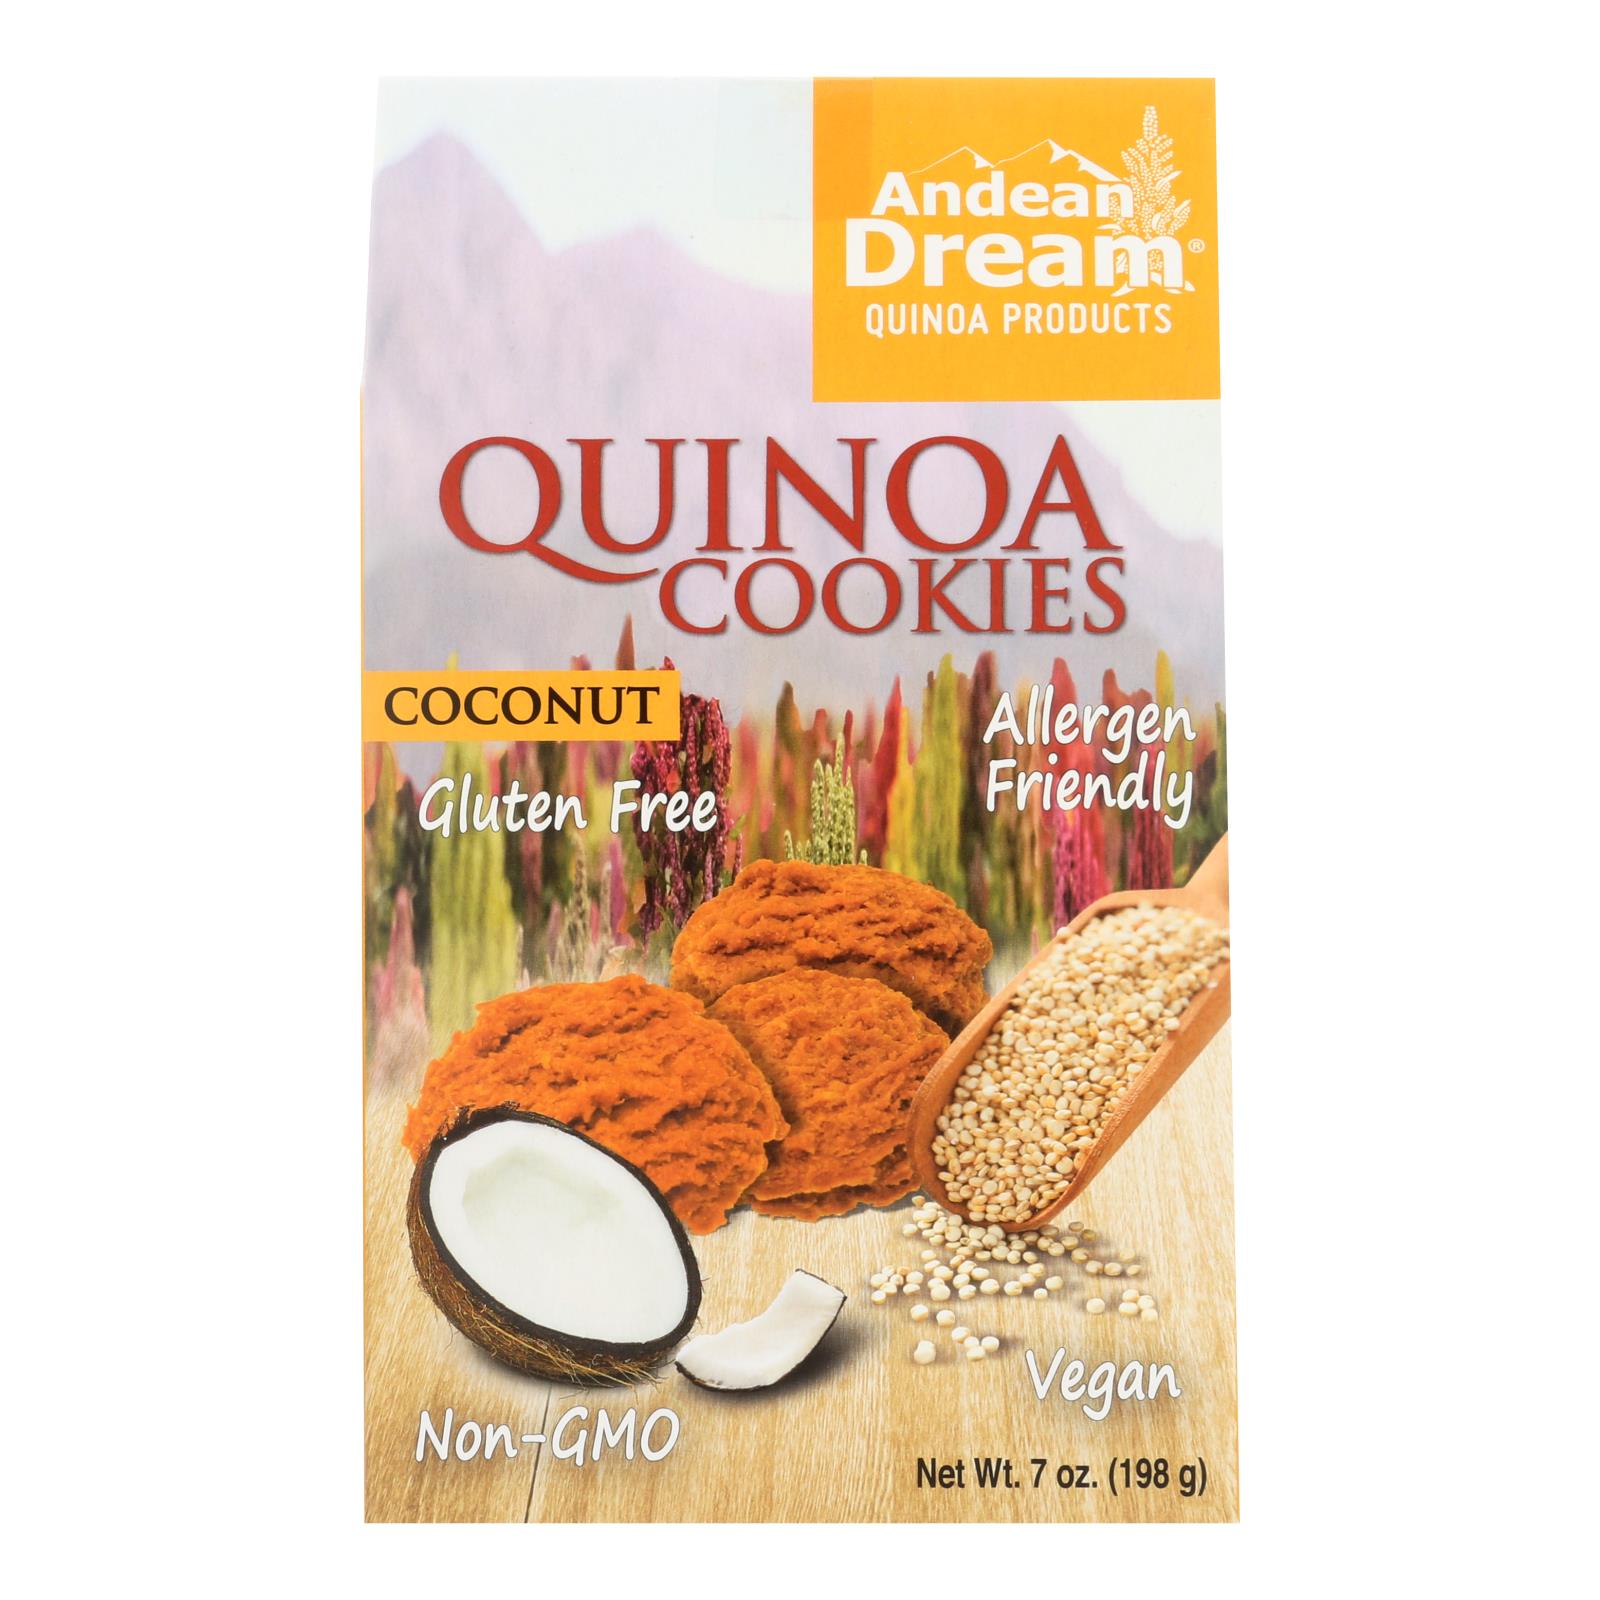 Andean Dream, Andean Dream Gluten Free Quinoa Cookies Coconut - Case of 6 - 7 oz. (Pack of 6)